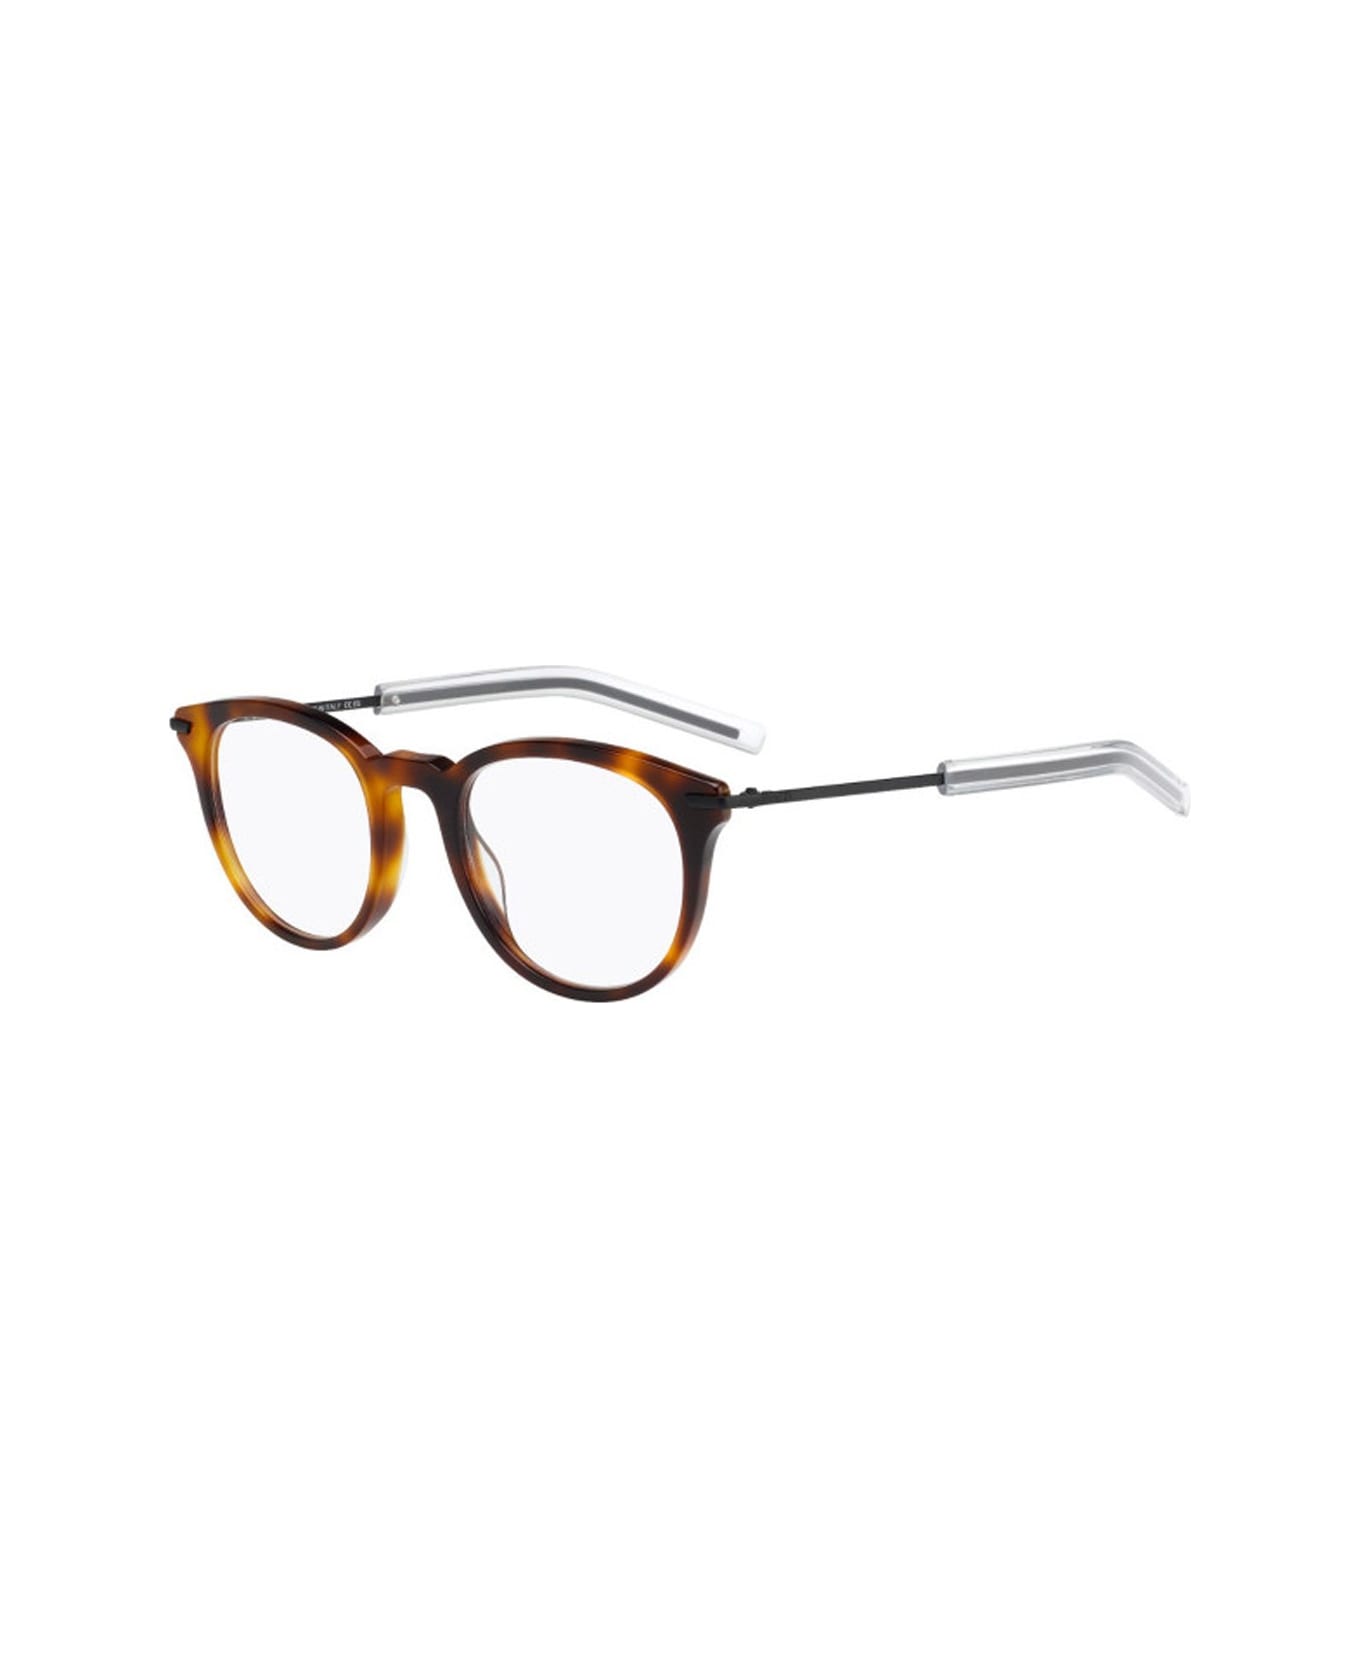 Dior Eyewear Blacktie201 Glasses - Marrone アイウェア